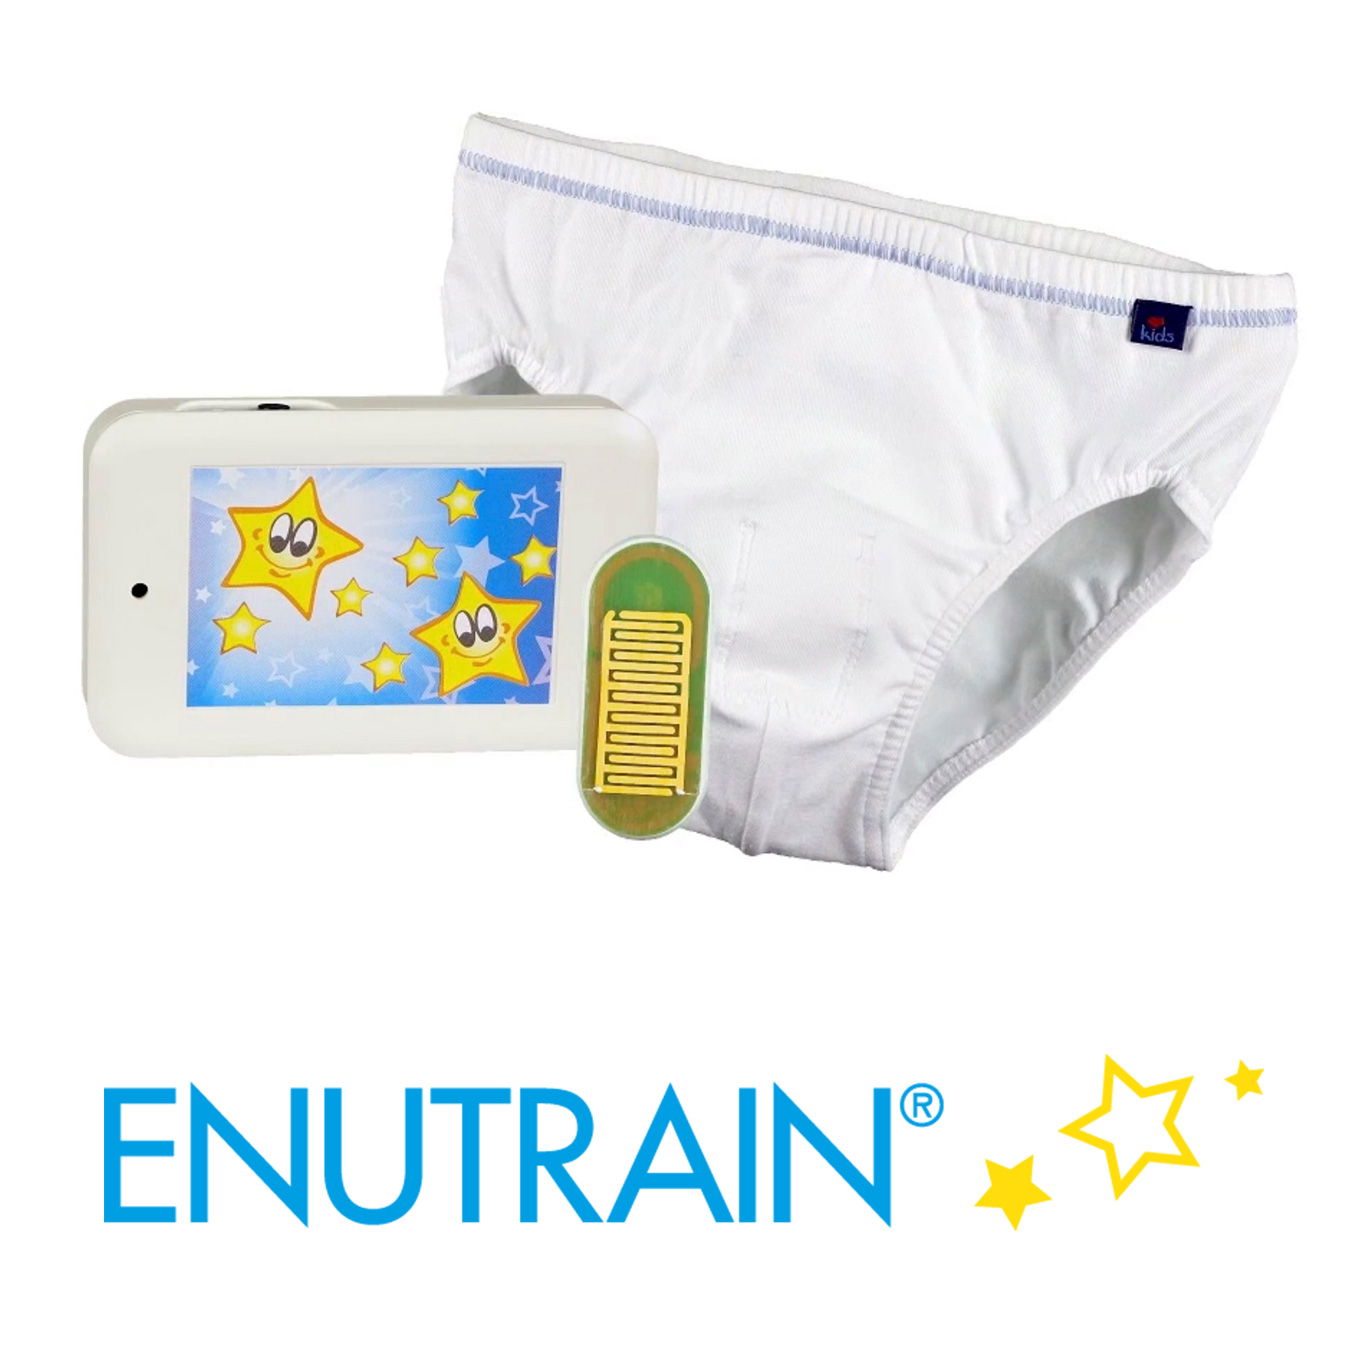 ENUTRAIN® Set (inkl. 2 Hosen) - Enutrain - Kinderleicht Trockenwerden